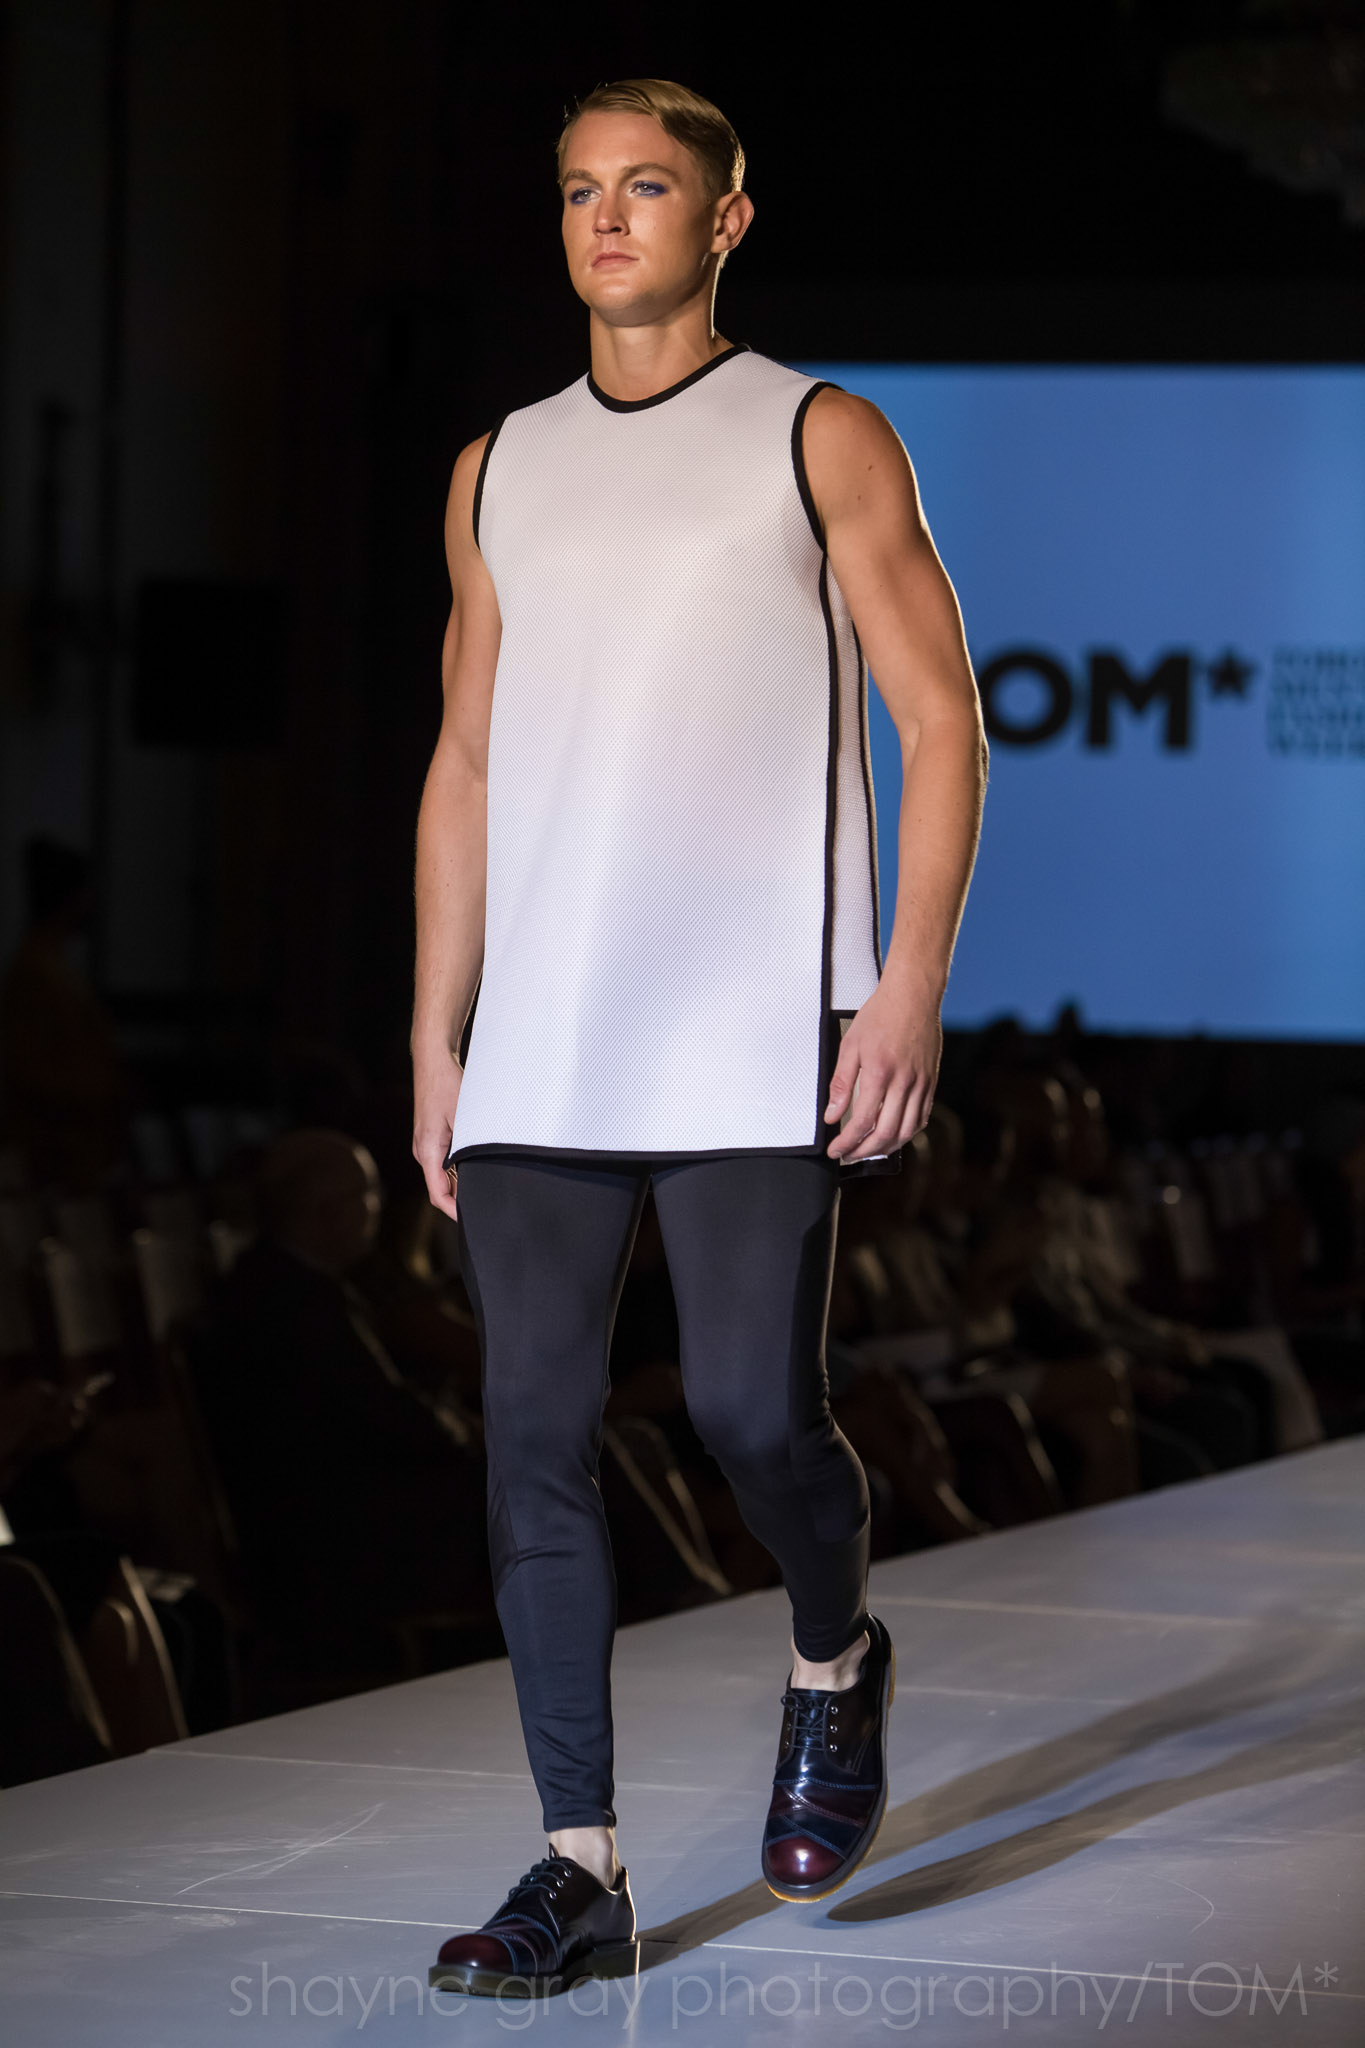 Shayne-Gray-Toronto-men's-fashion_week-TOM-diodati-6176.jpg